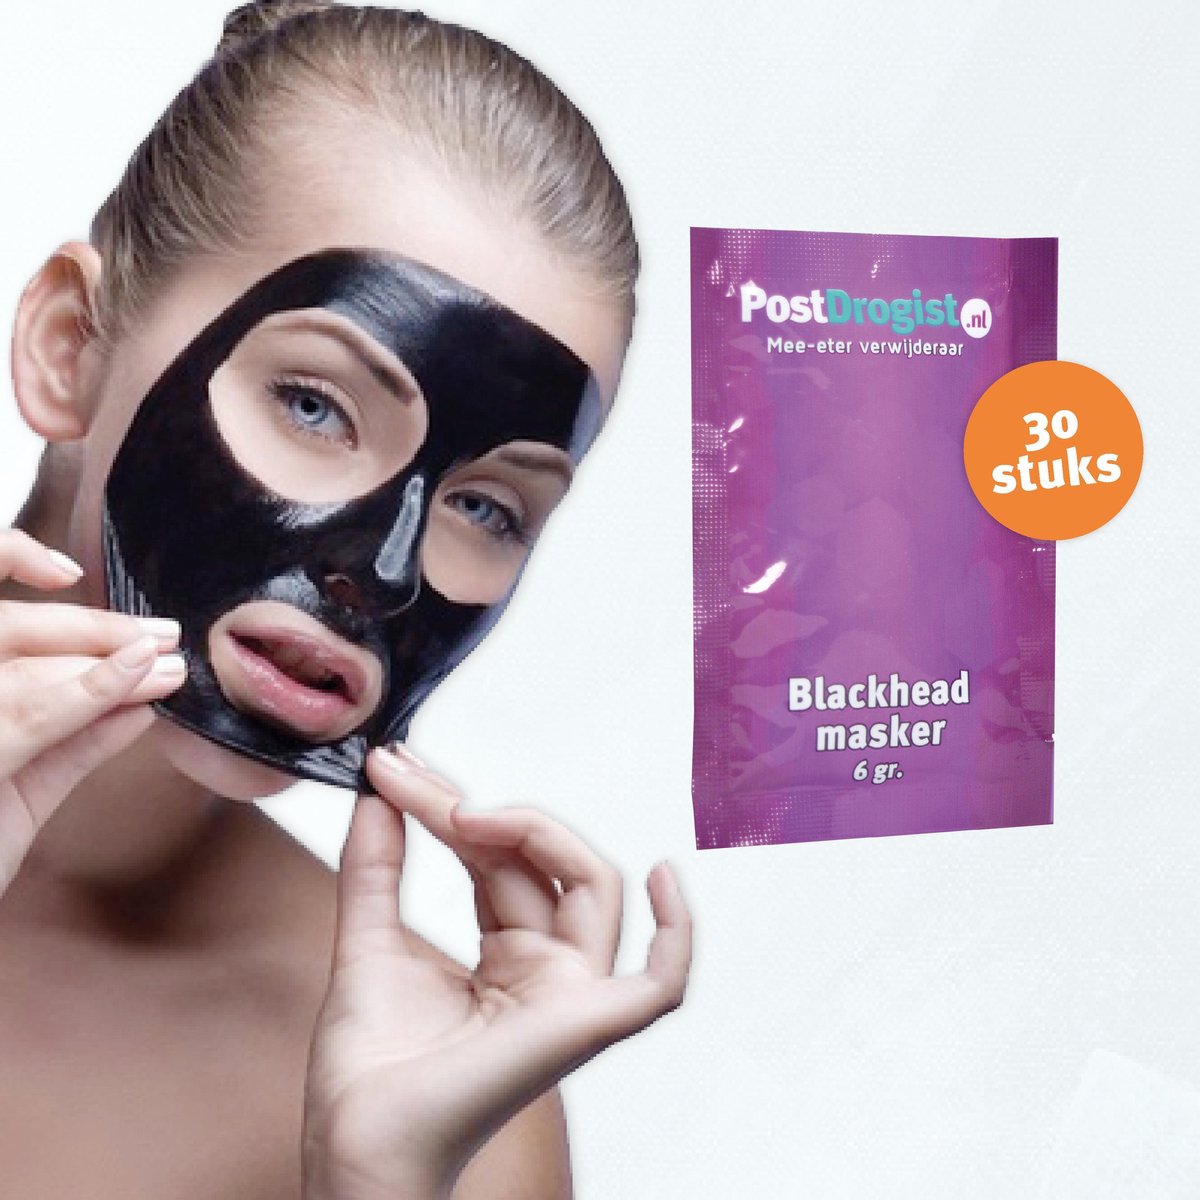 30 x Nederlandstalige Blackhead Maskers zakje 6 gram / verwijderen bol.com